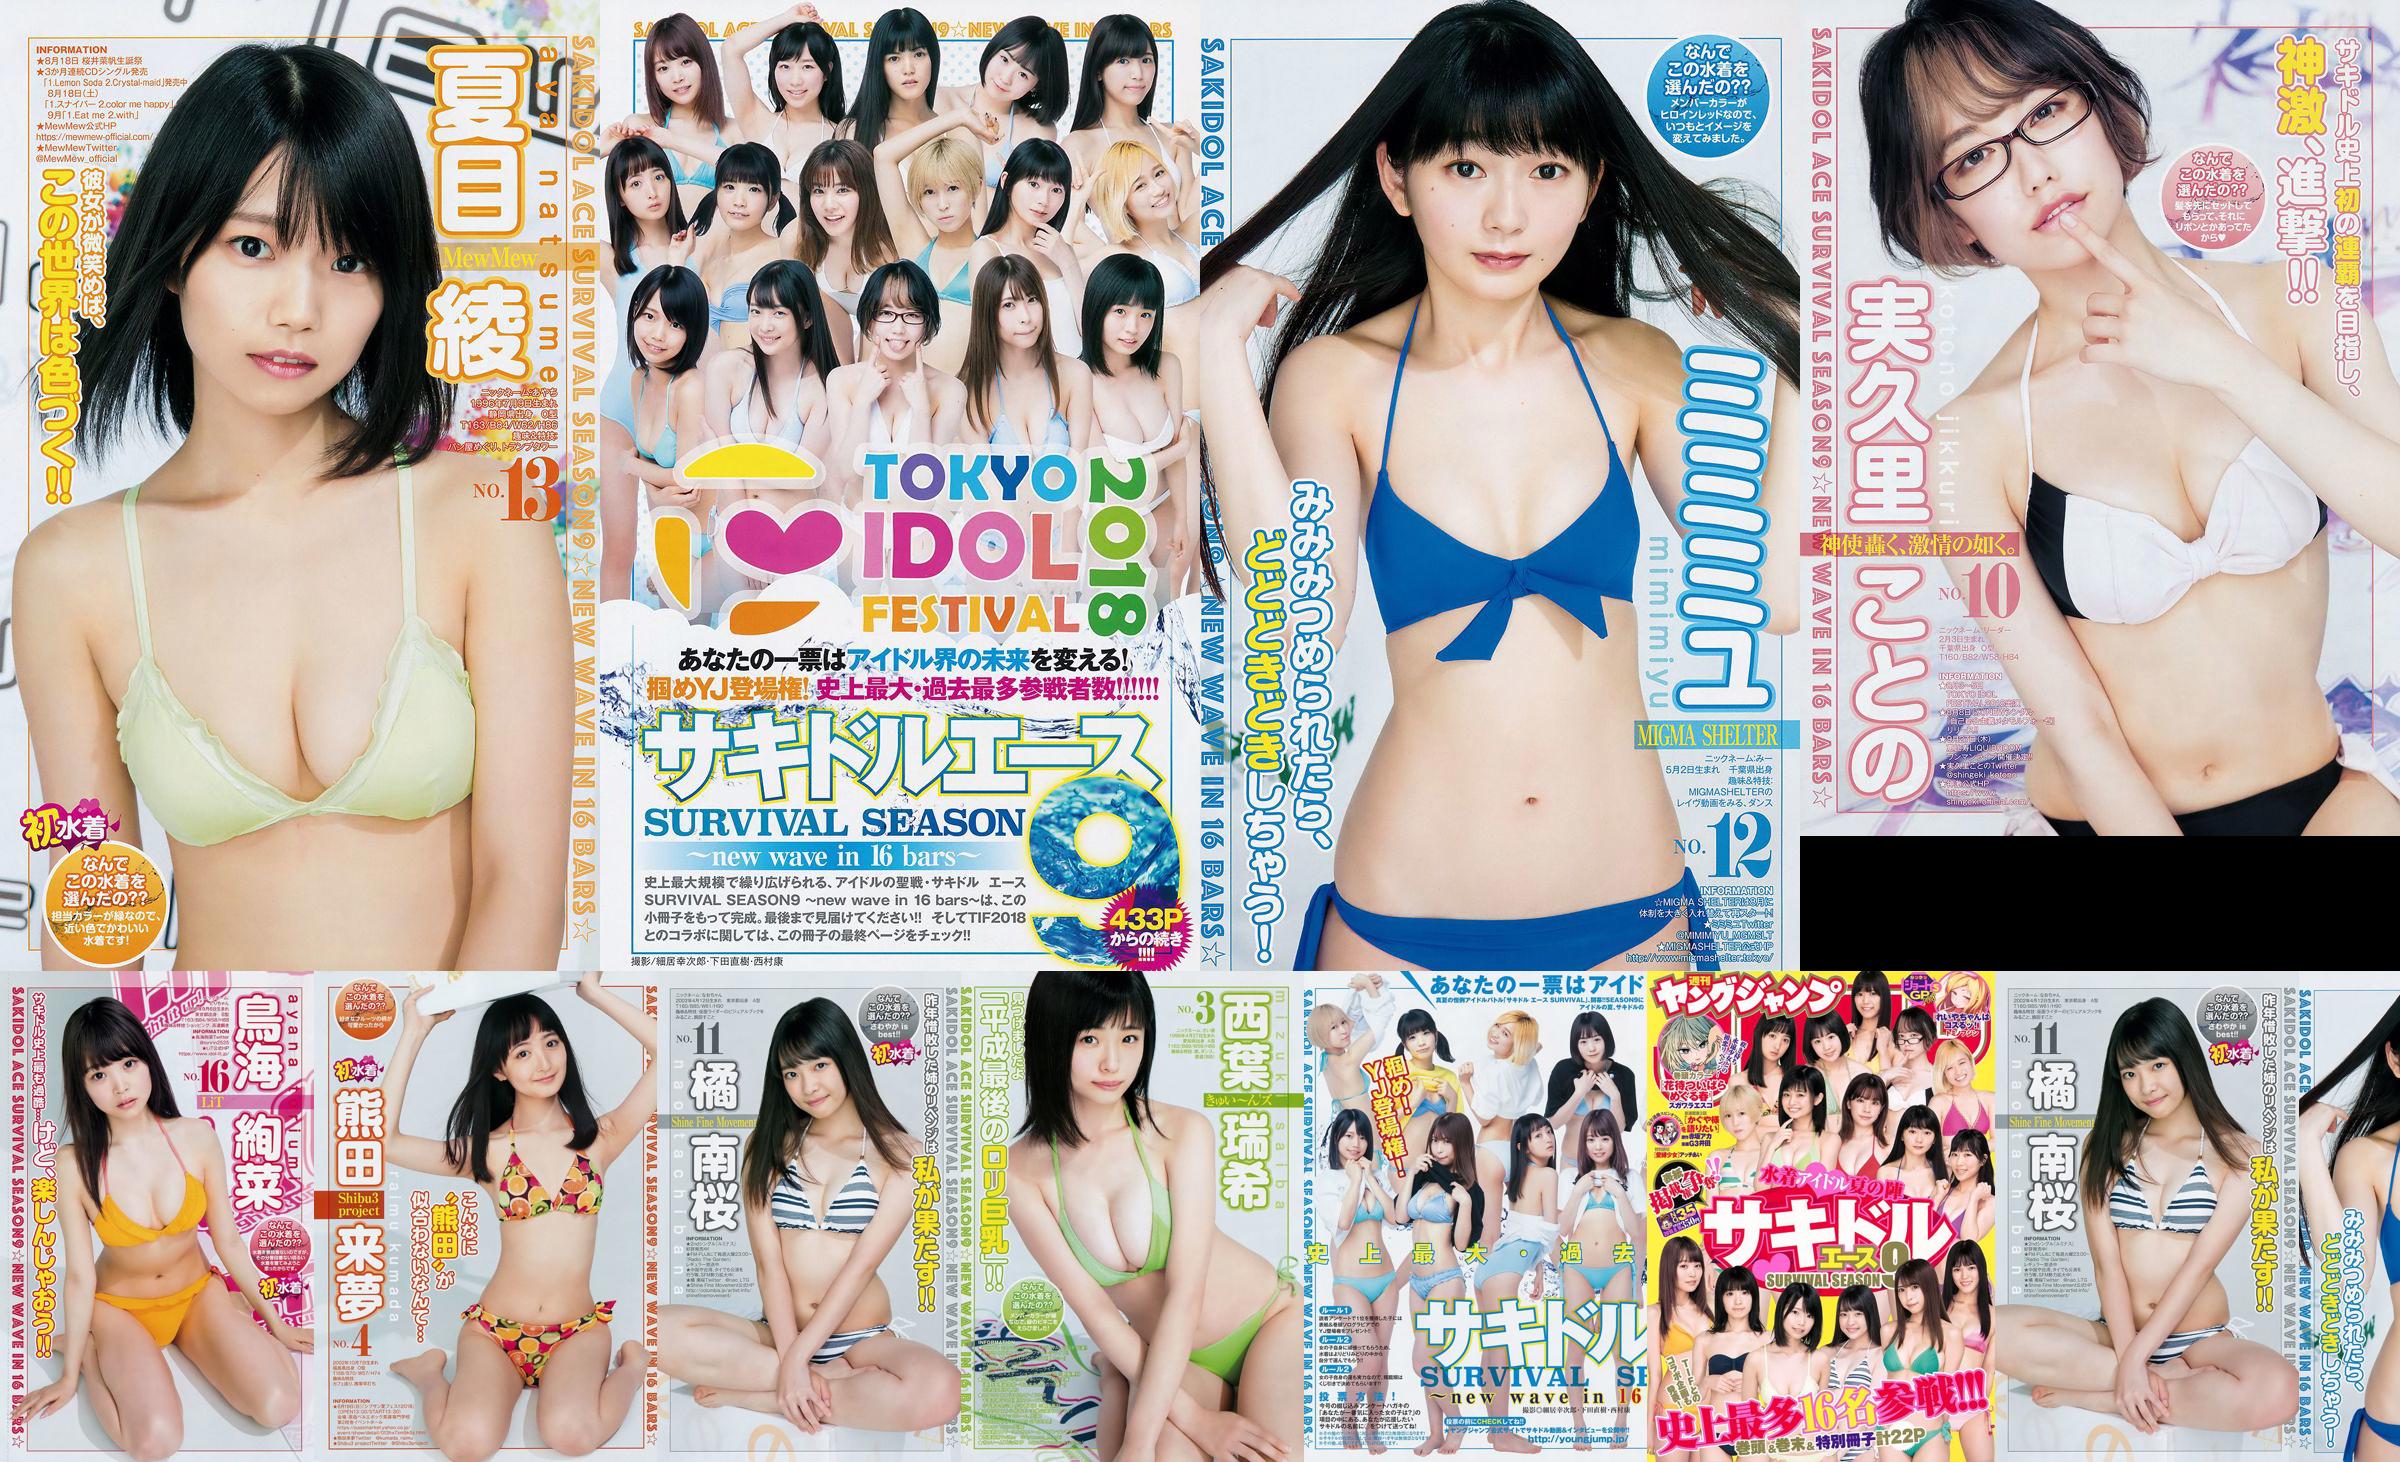 [FLASH] Ikumi Hisamatsu Risa Hirako Ren Ishikawa Angel Moe AKB48 Kaho Shibuya Misuzu Hayashi Ririka 2015.04.21 Photo Toshi No.b5f215 Page 4